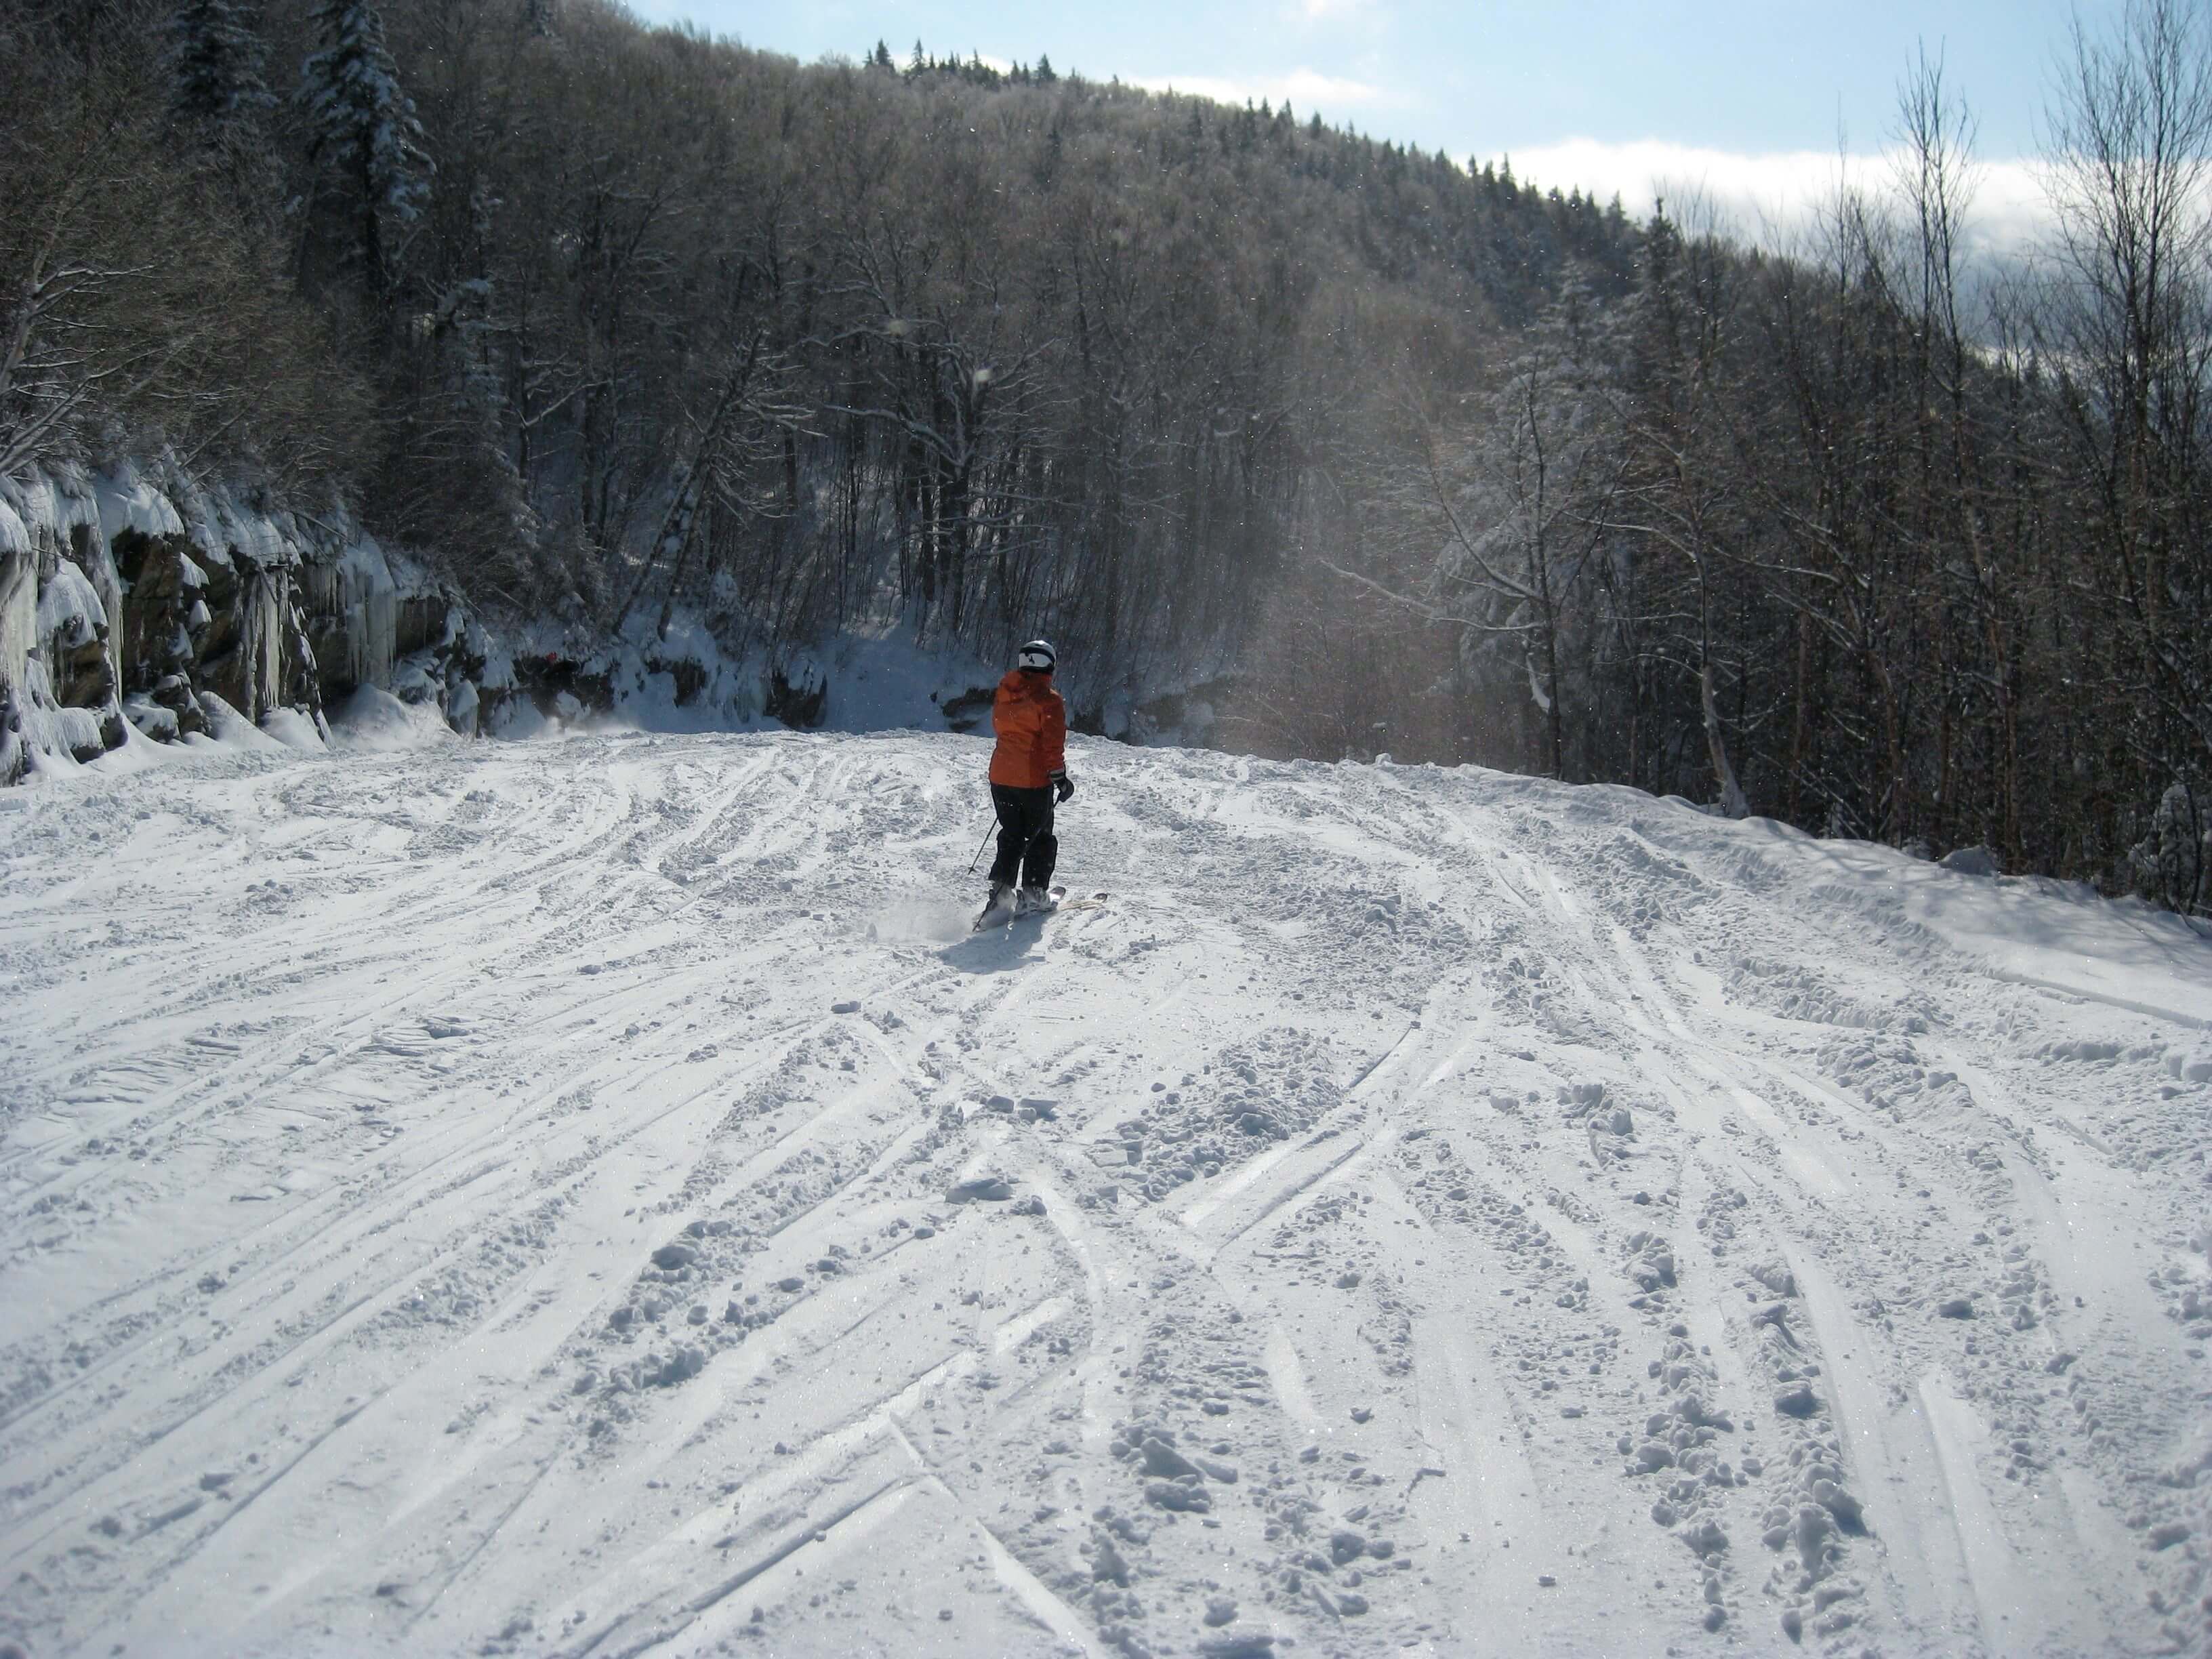 Magic Mountain Ski Area: where to visit in February